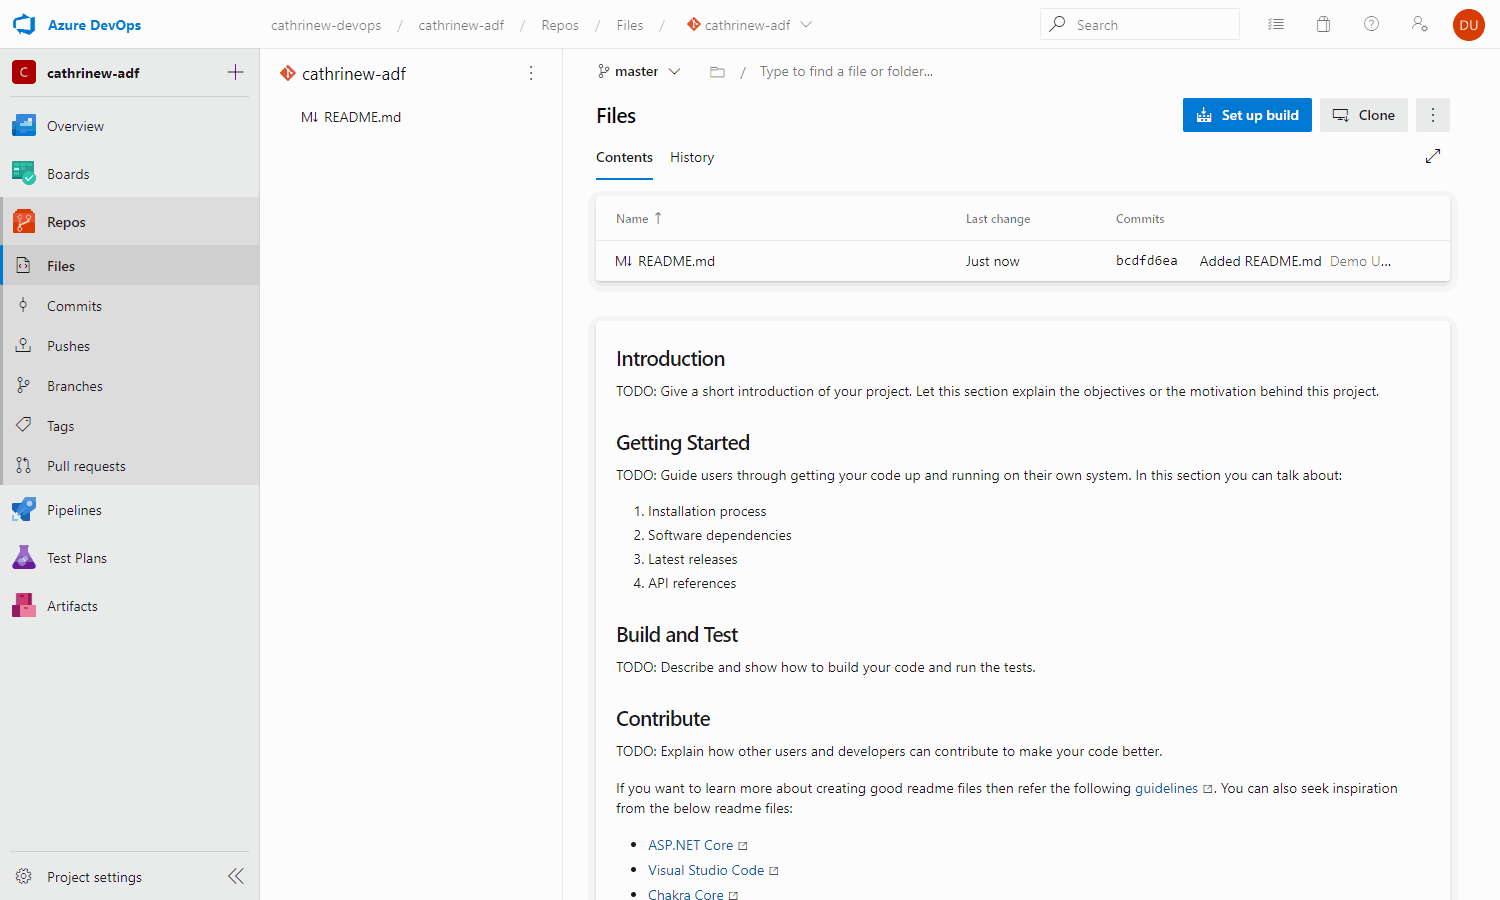 Screenshot of the empty code repository in Azure DevOps